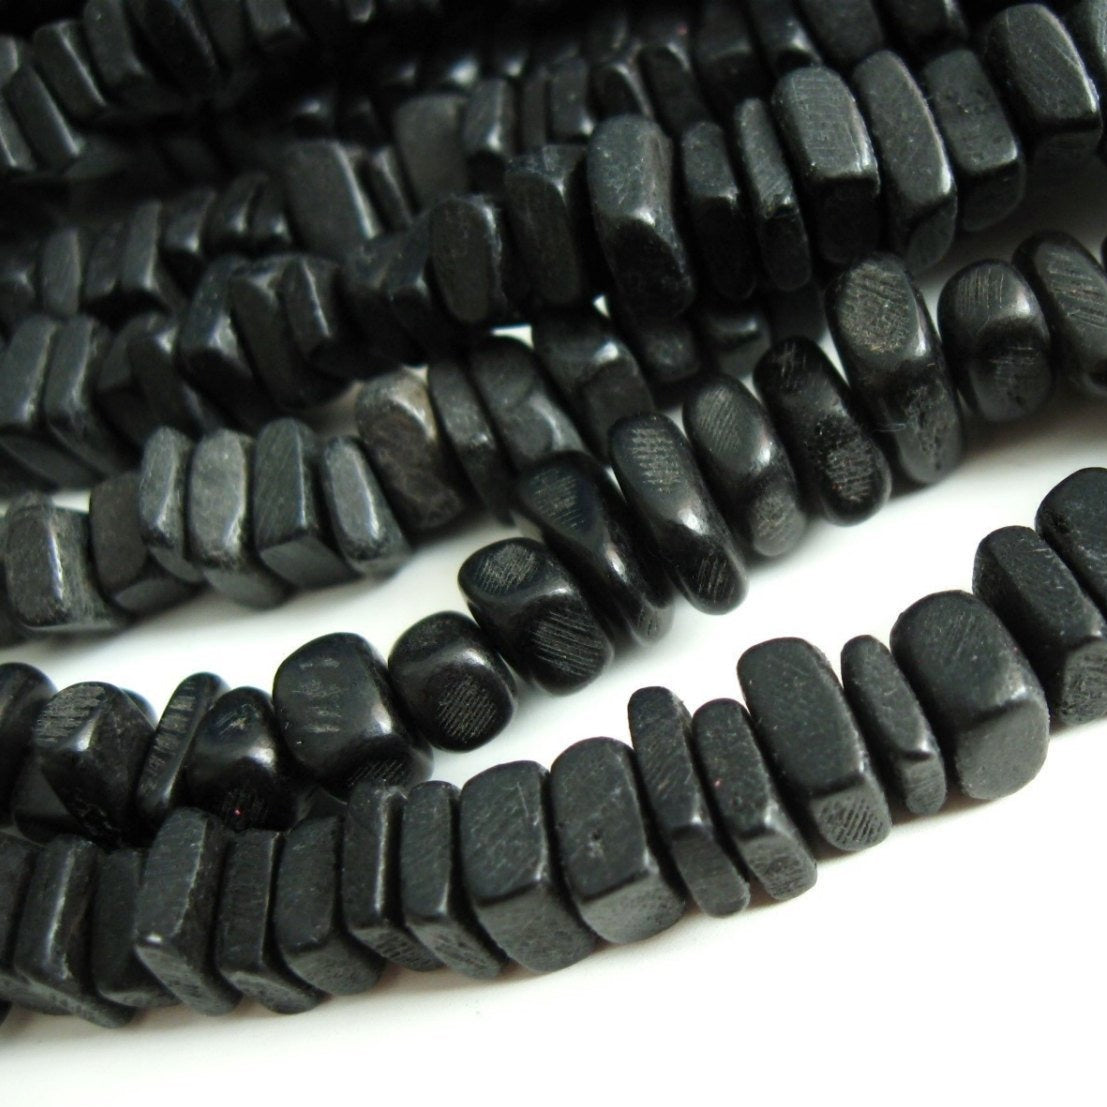 Black Wood CocoNut Shell Beads - Square cut beads 6mm - Half strand